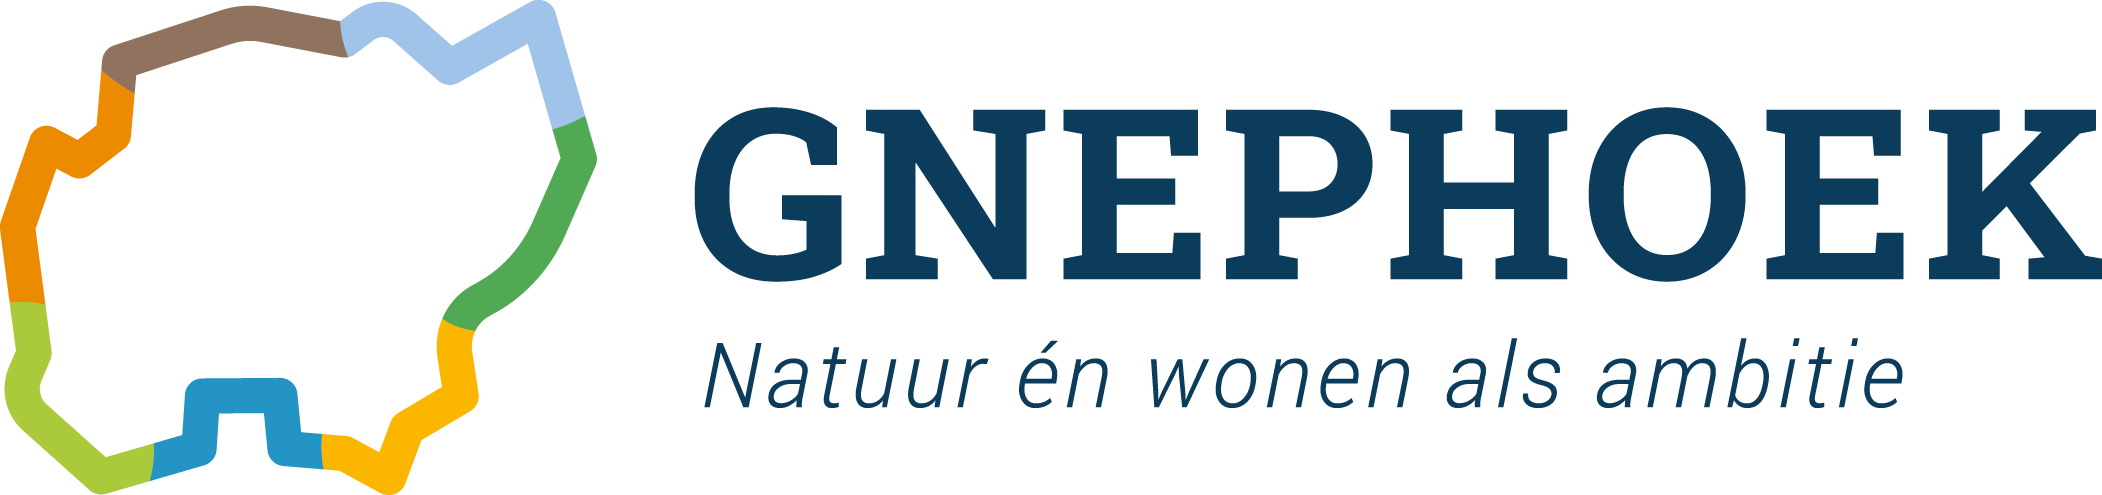 Gnephoek logo